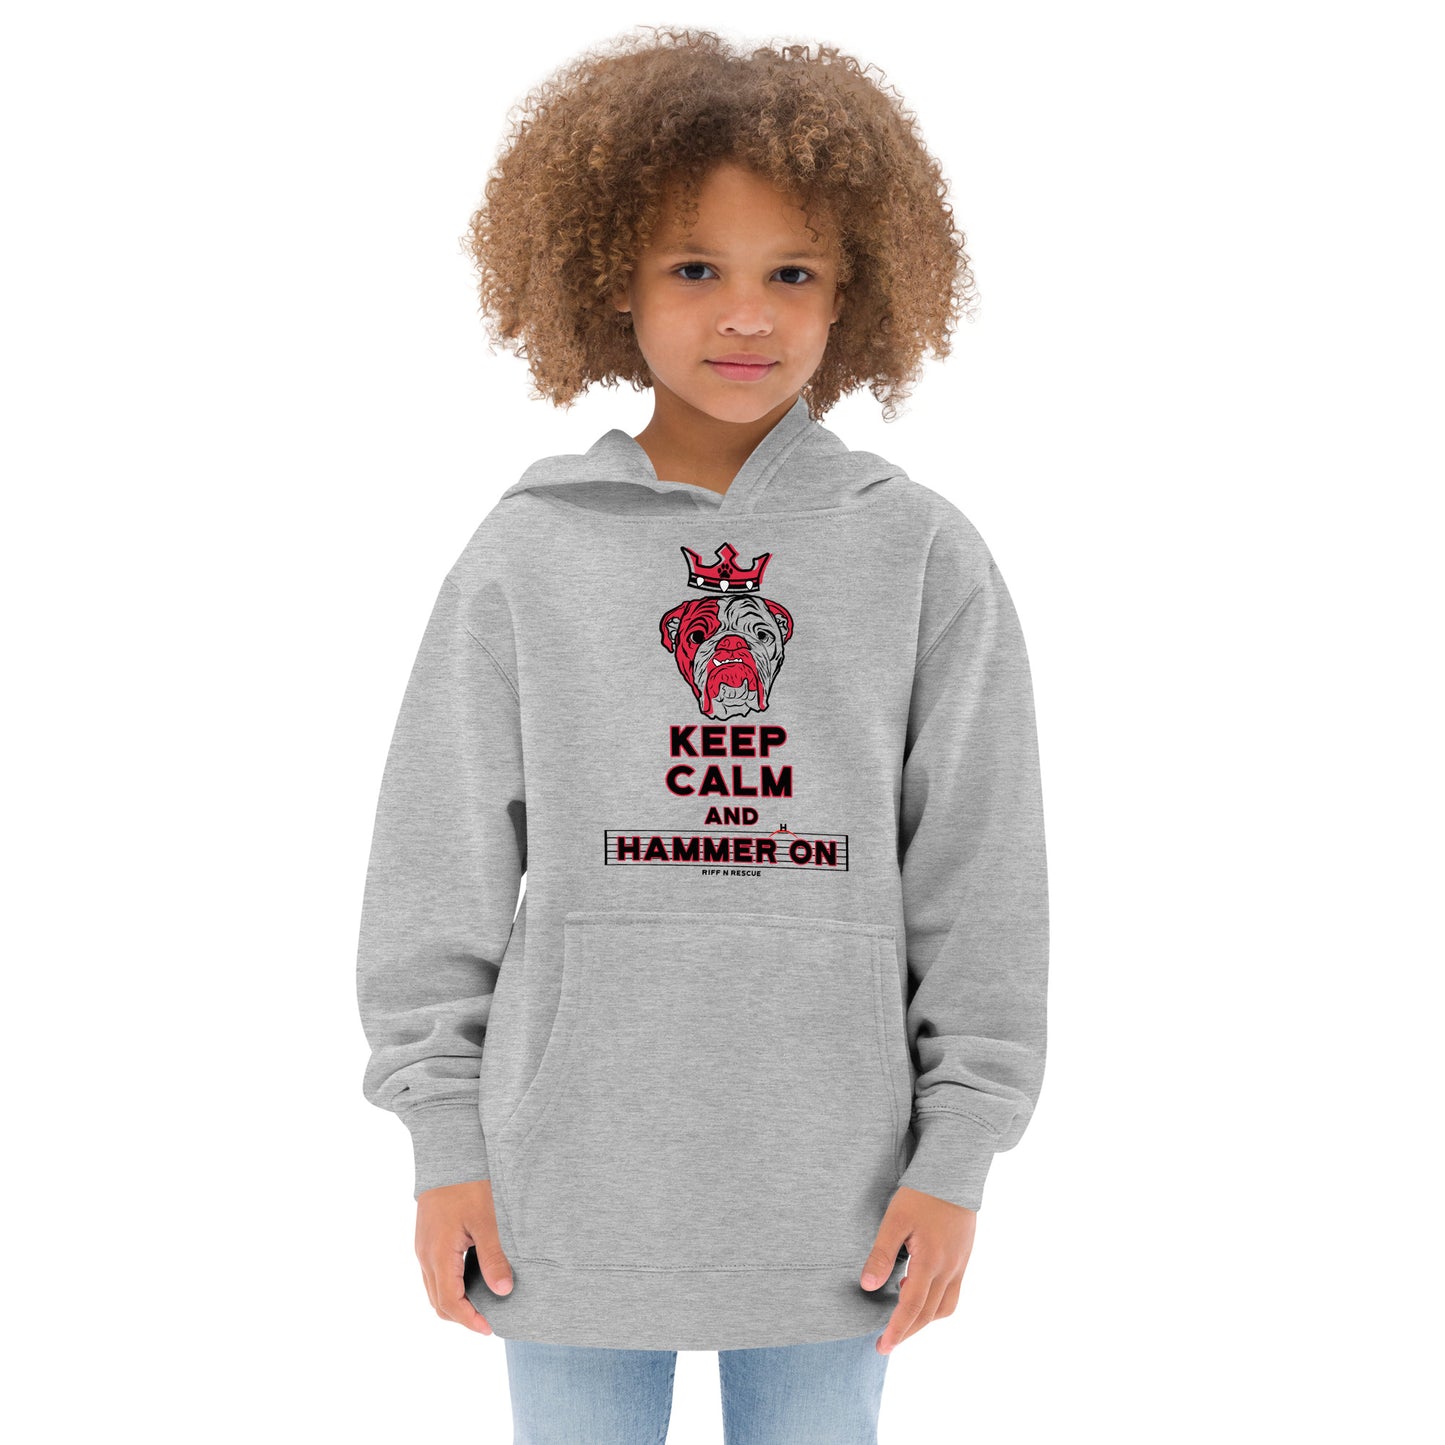 Keep Calm and Hammer On Kids fleece hoodie